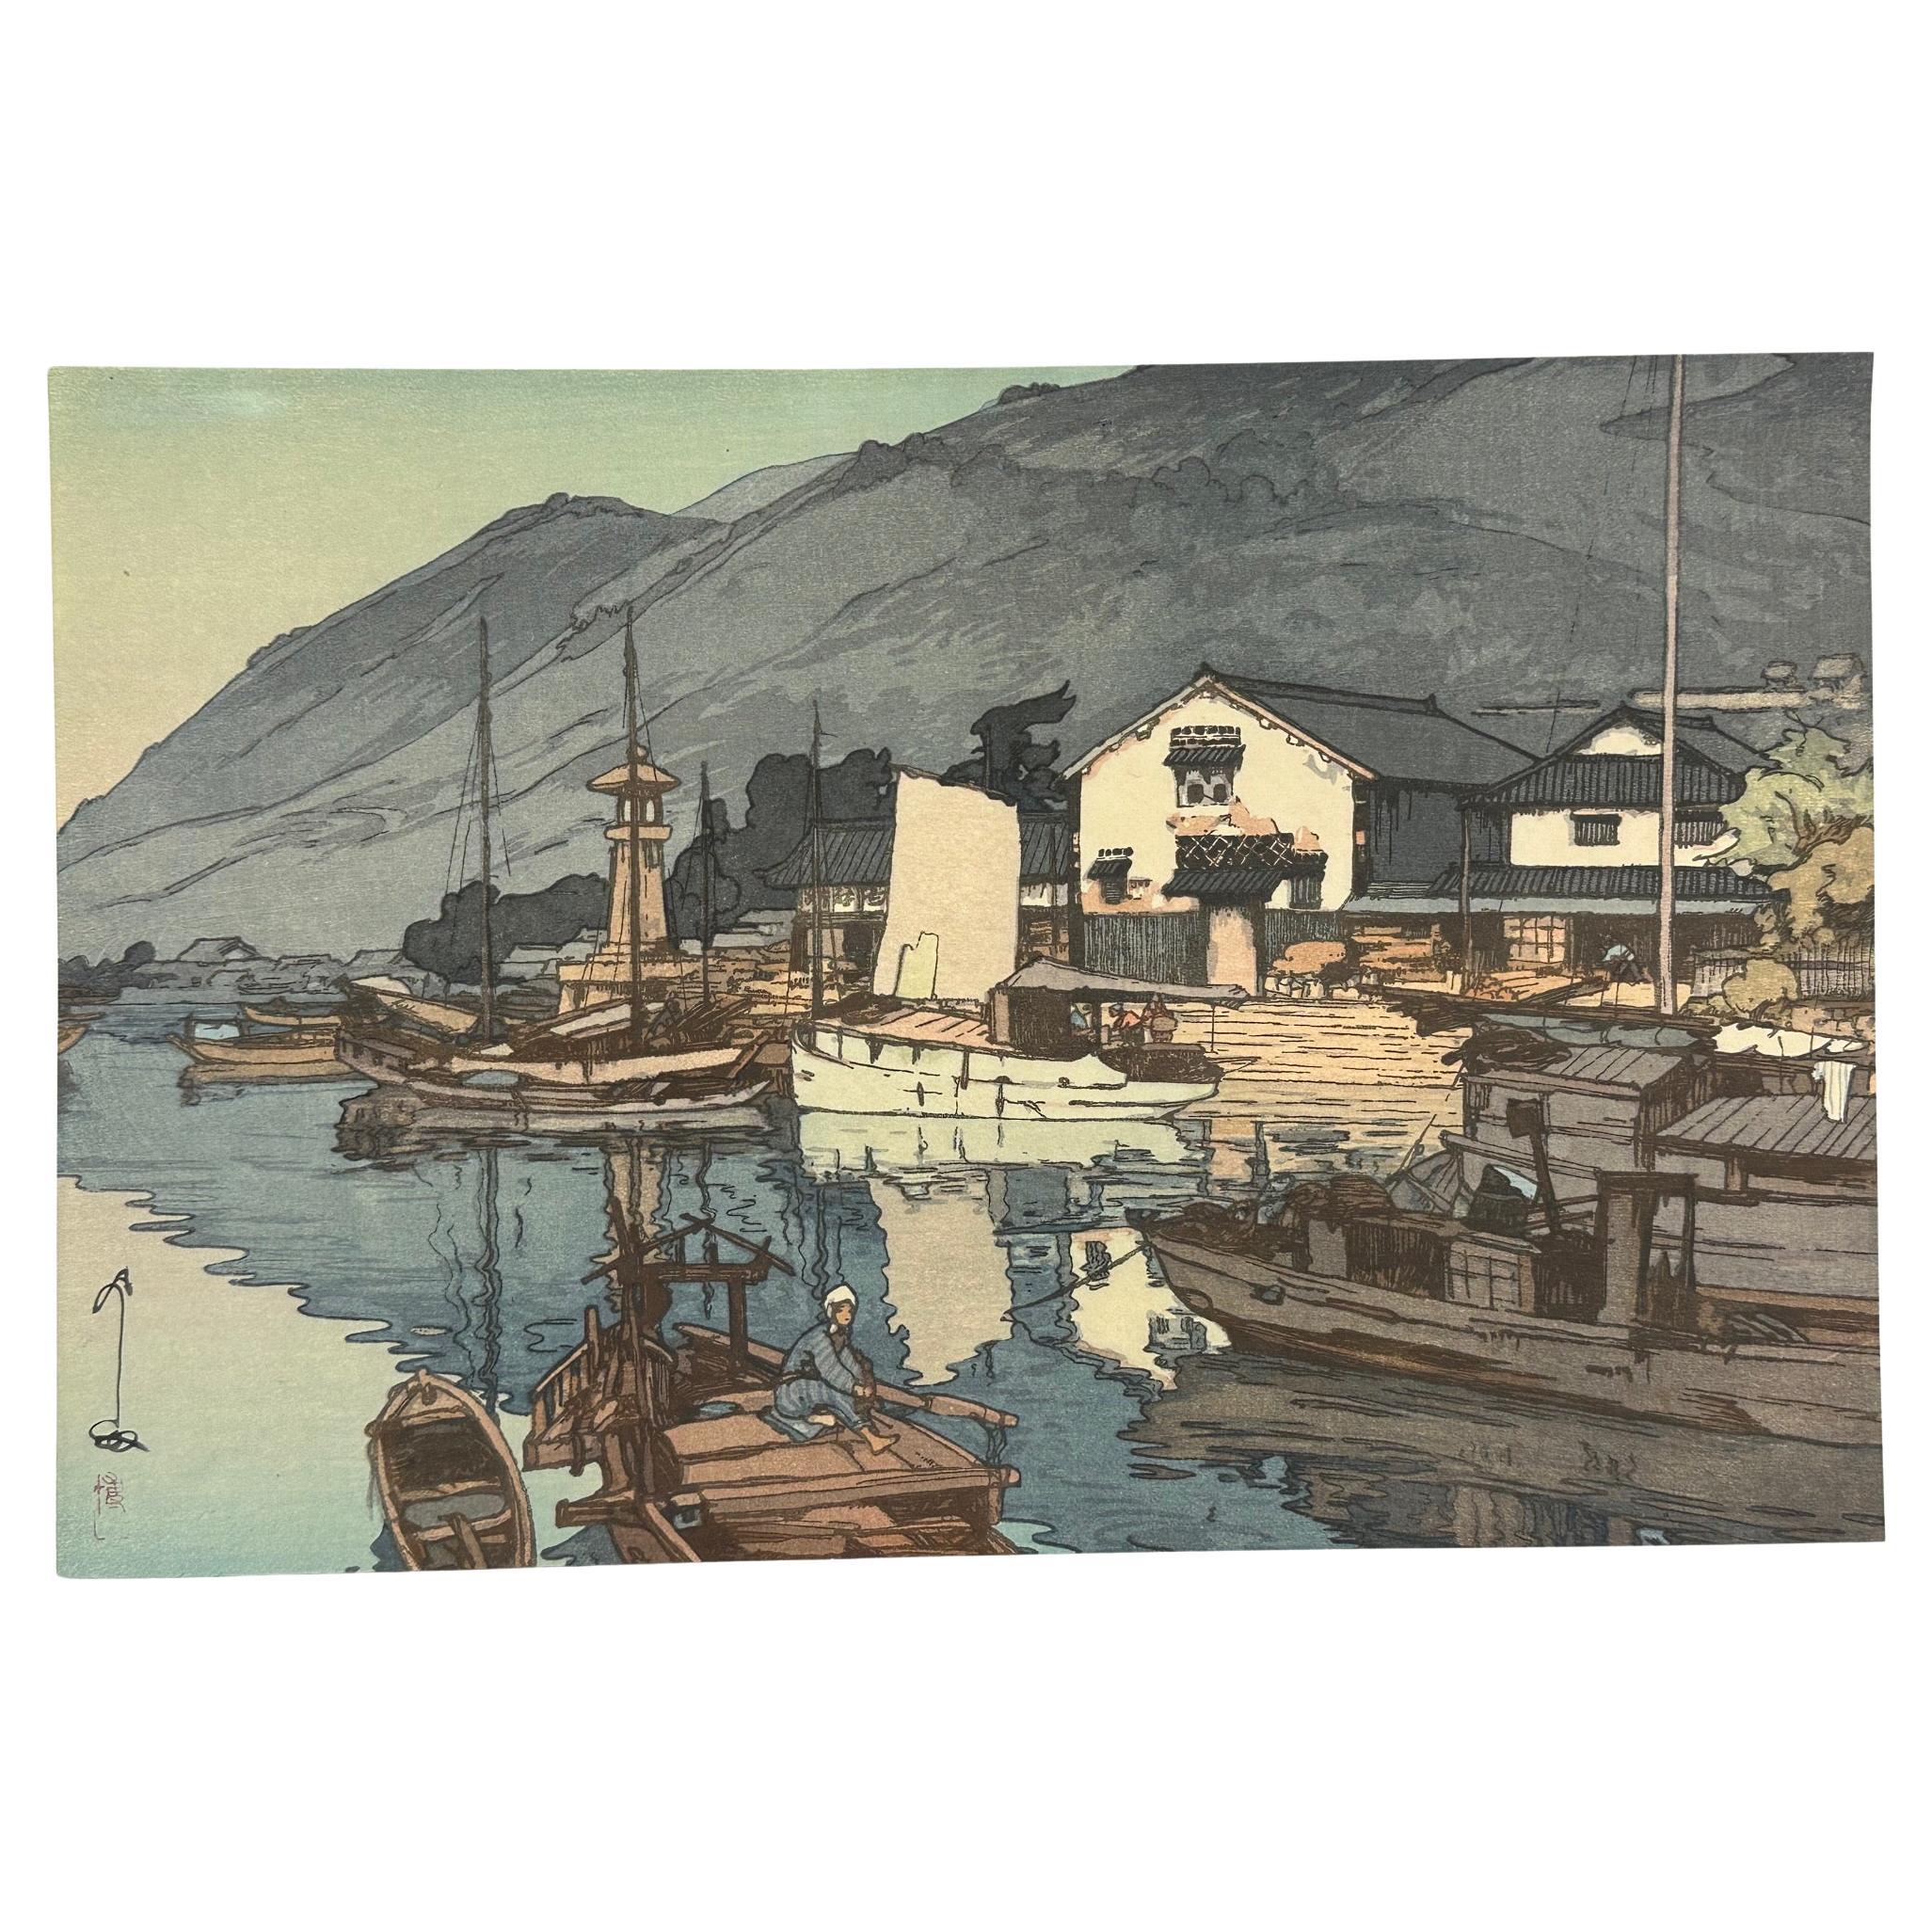 Hiroshi Yoshida Holzschnittdruck „ Hafen von Tomonoura“ 1930 Original